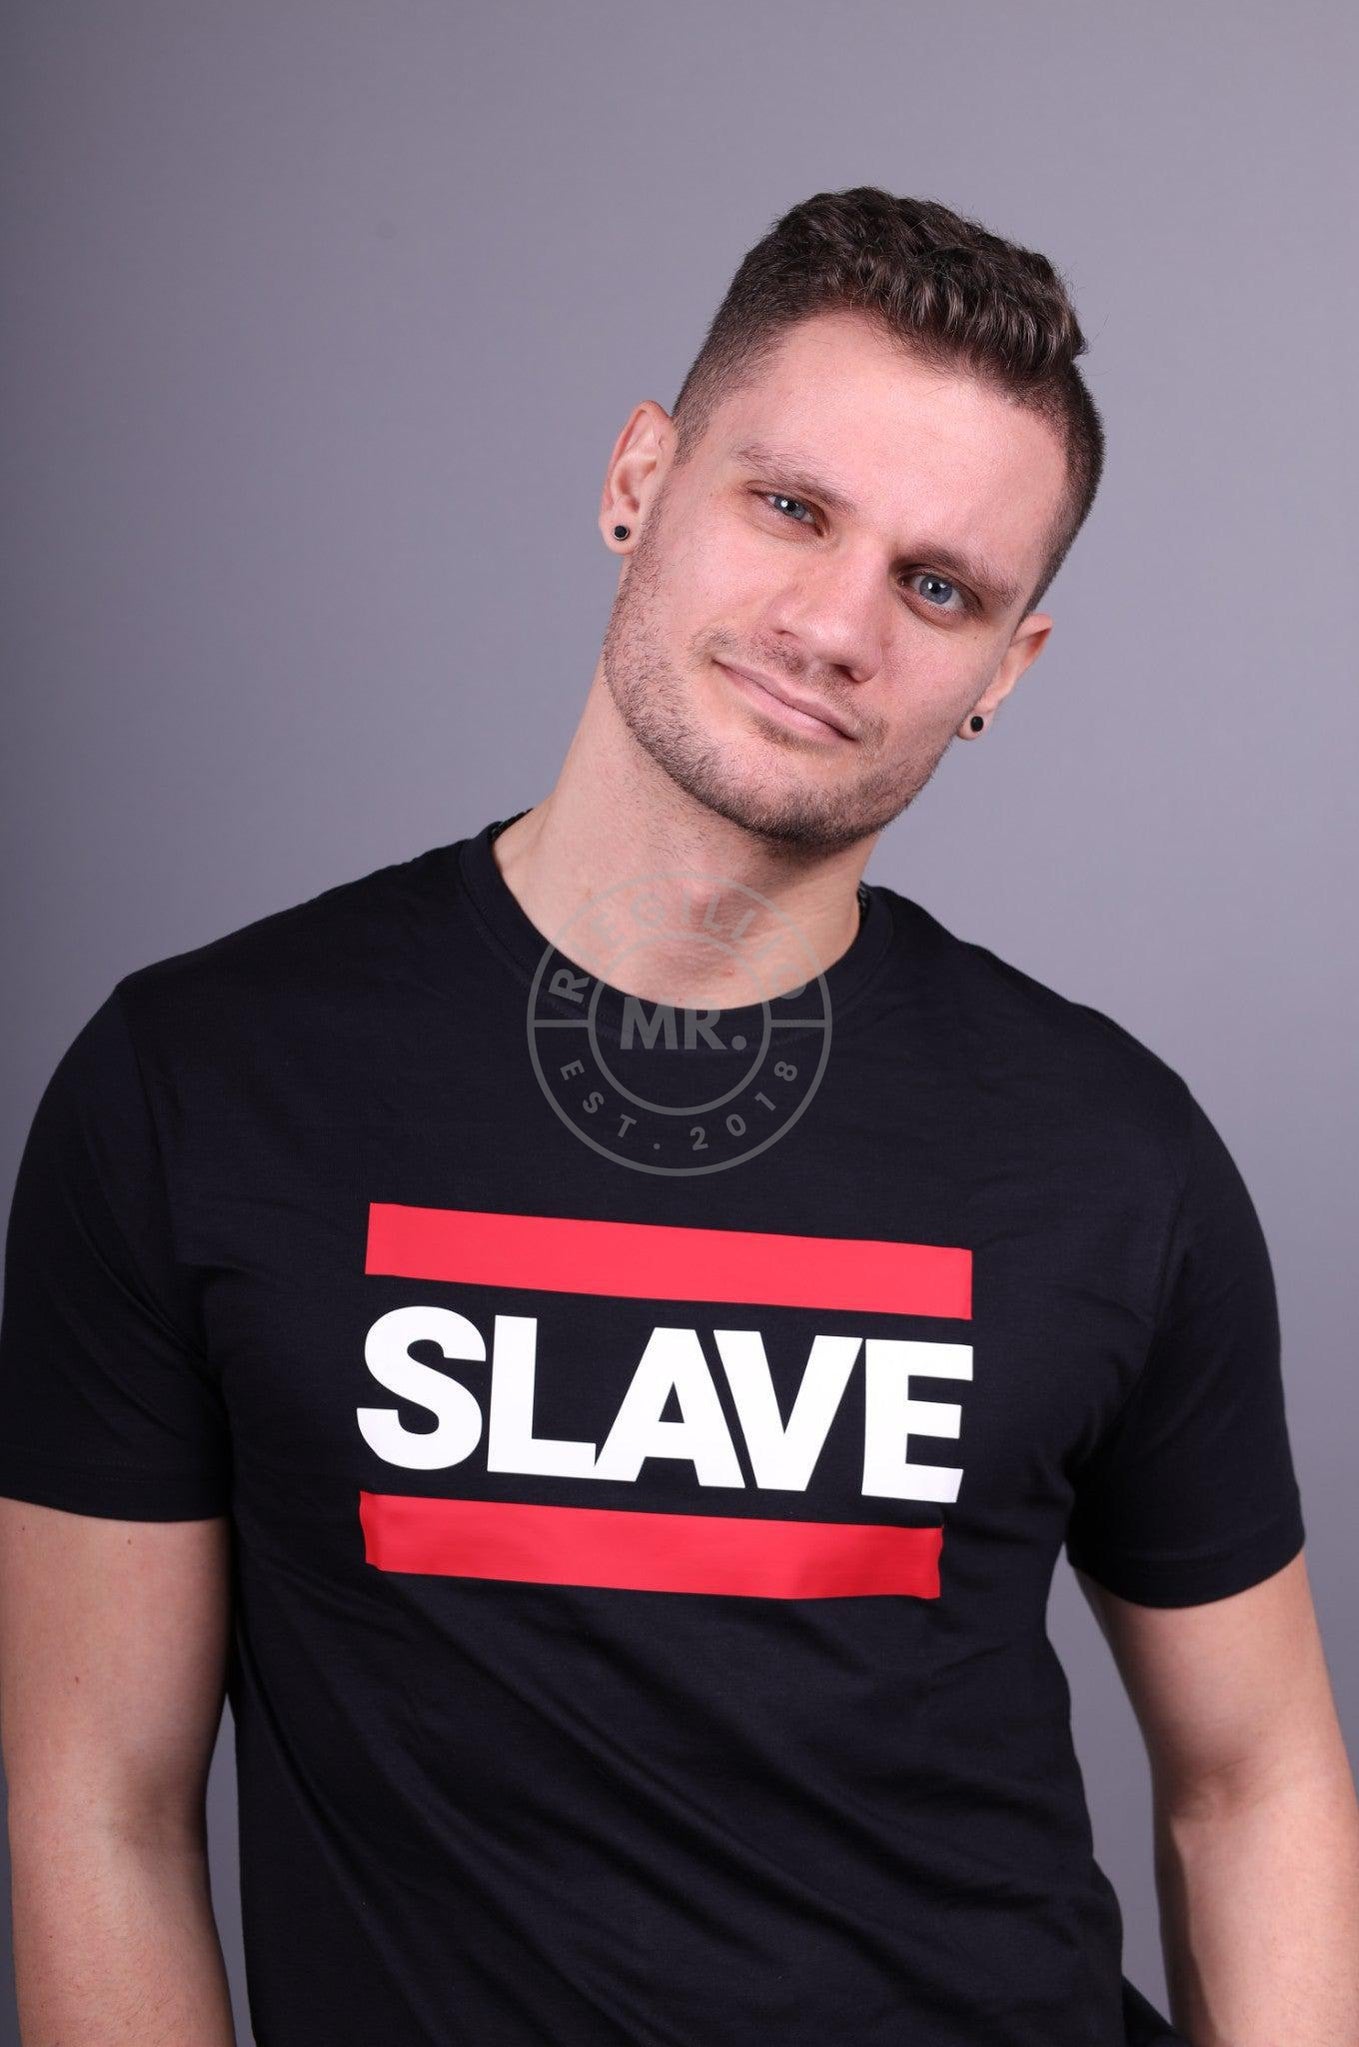 Sk8erboy SLAVE T-Shirt-at MR. Riegillio